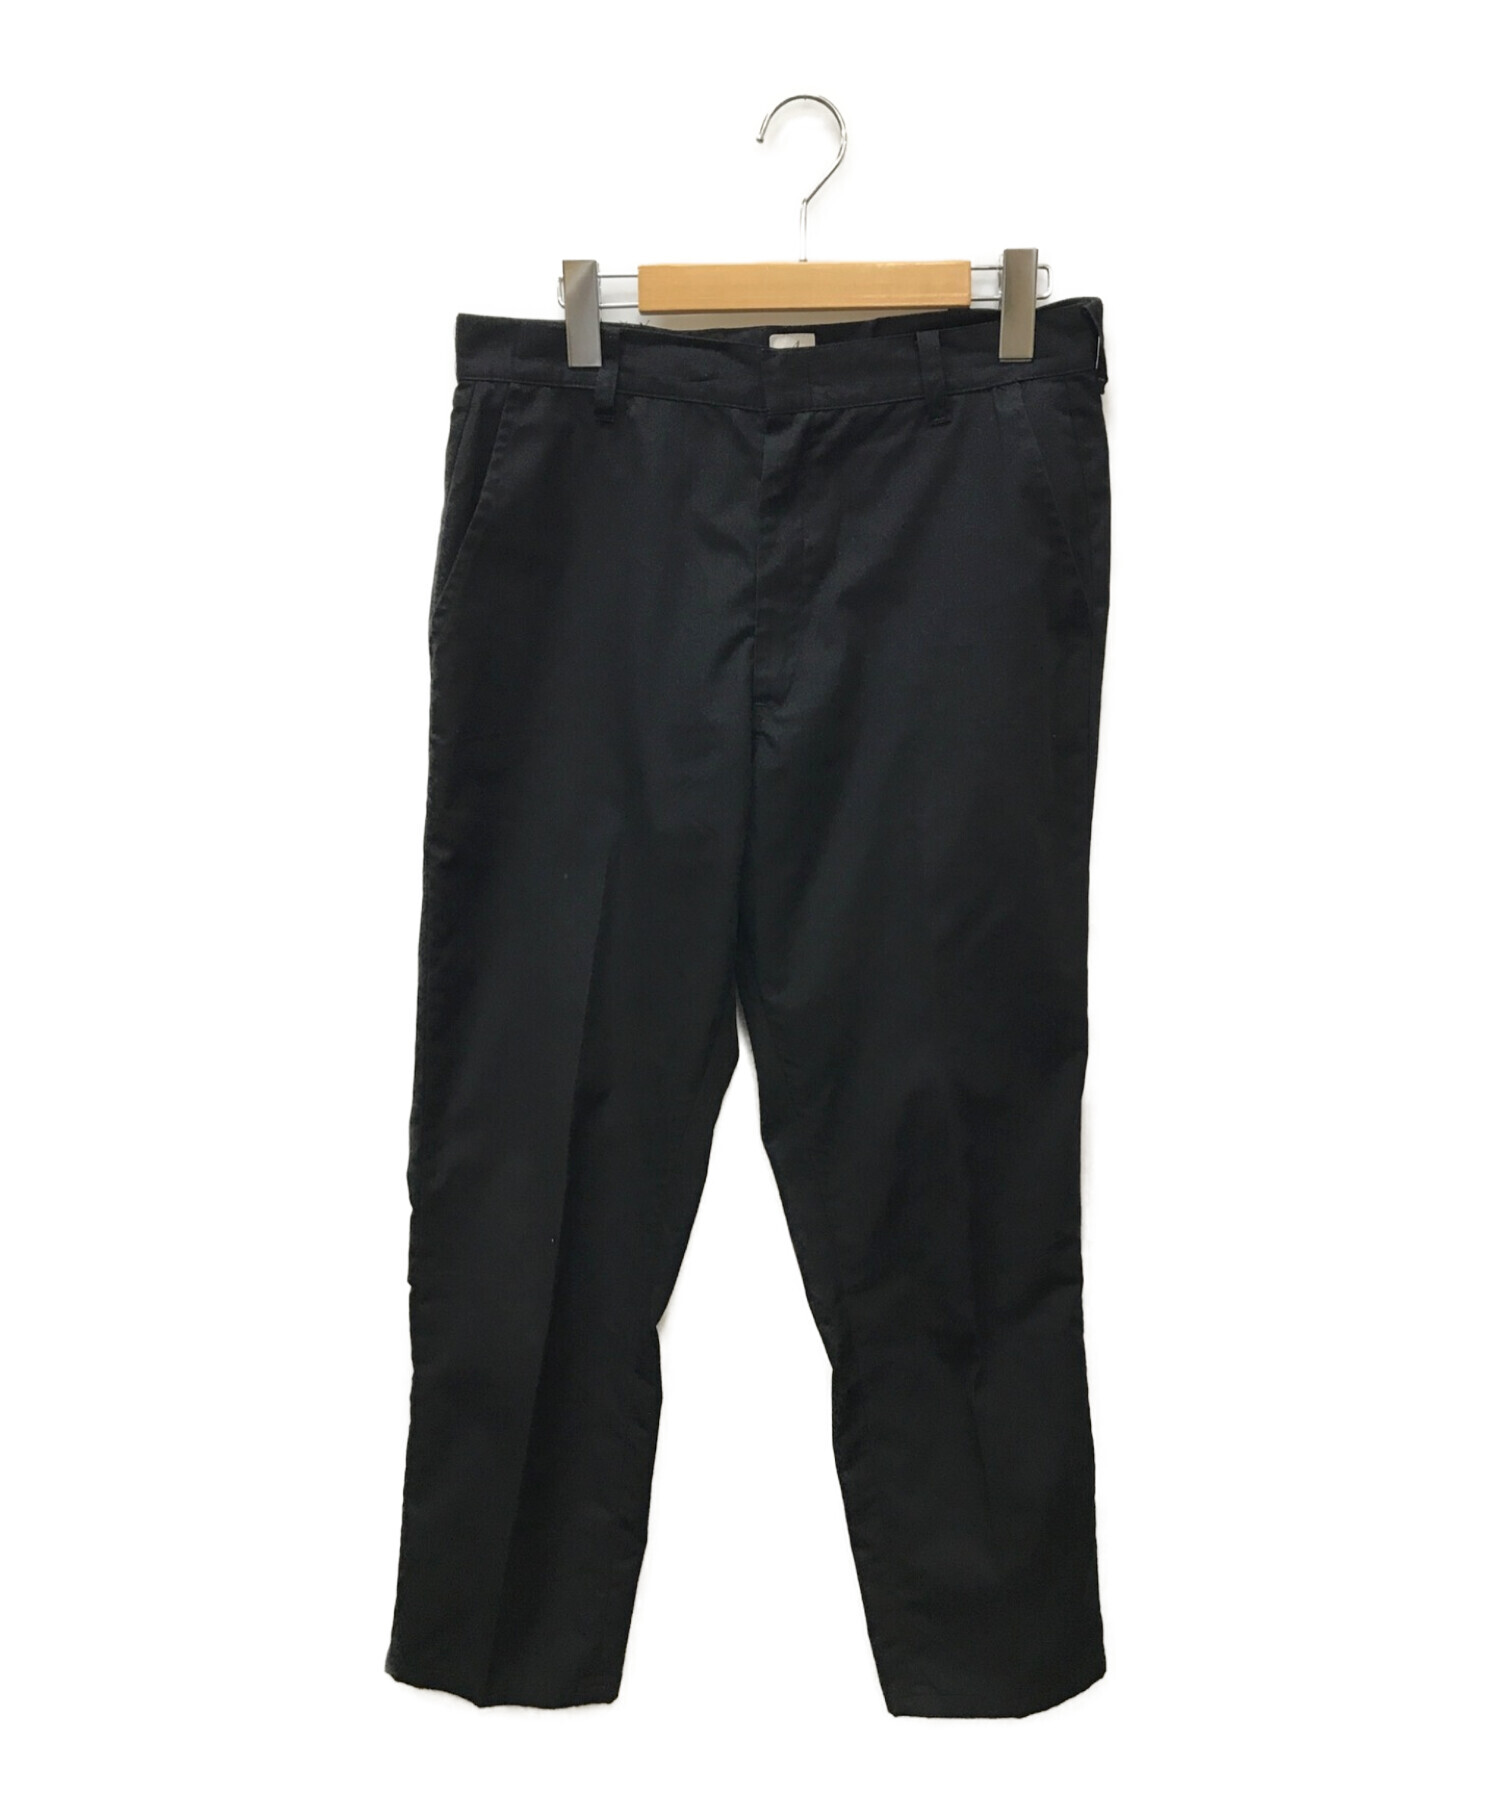 ANATOMICA (アナトミカ) TRIM FIT PANTS ブラック サイズ:32